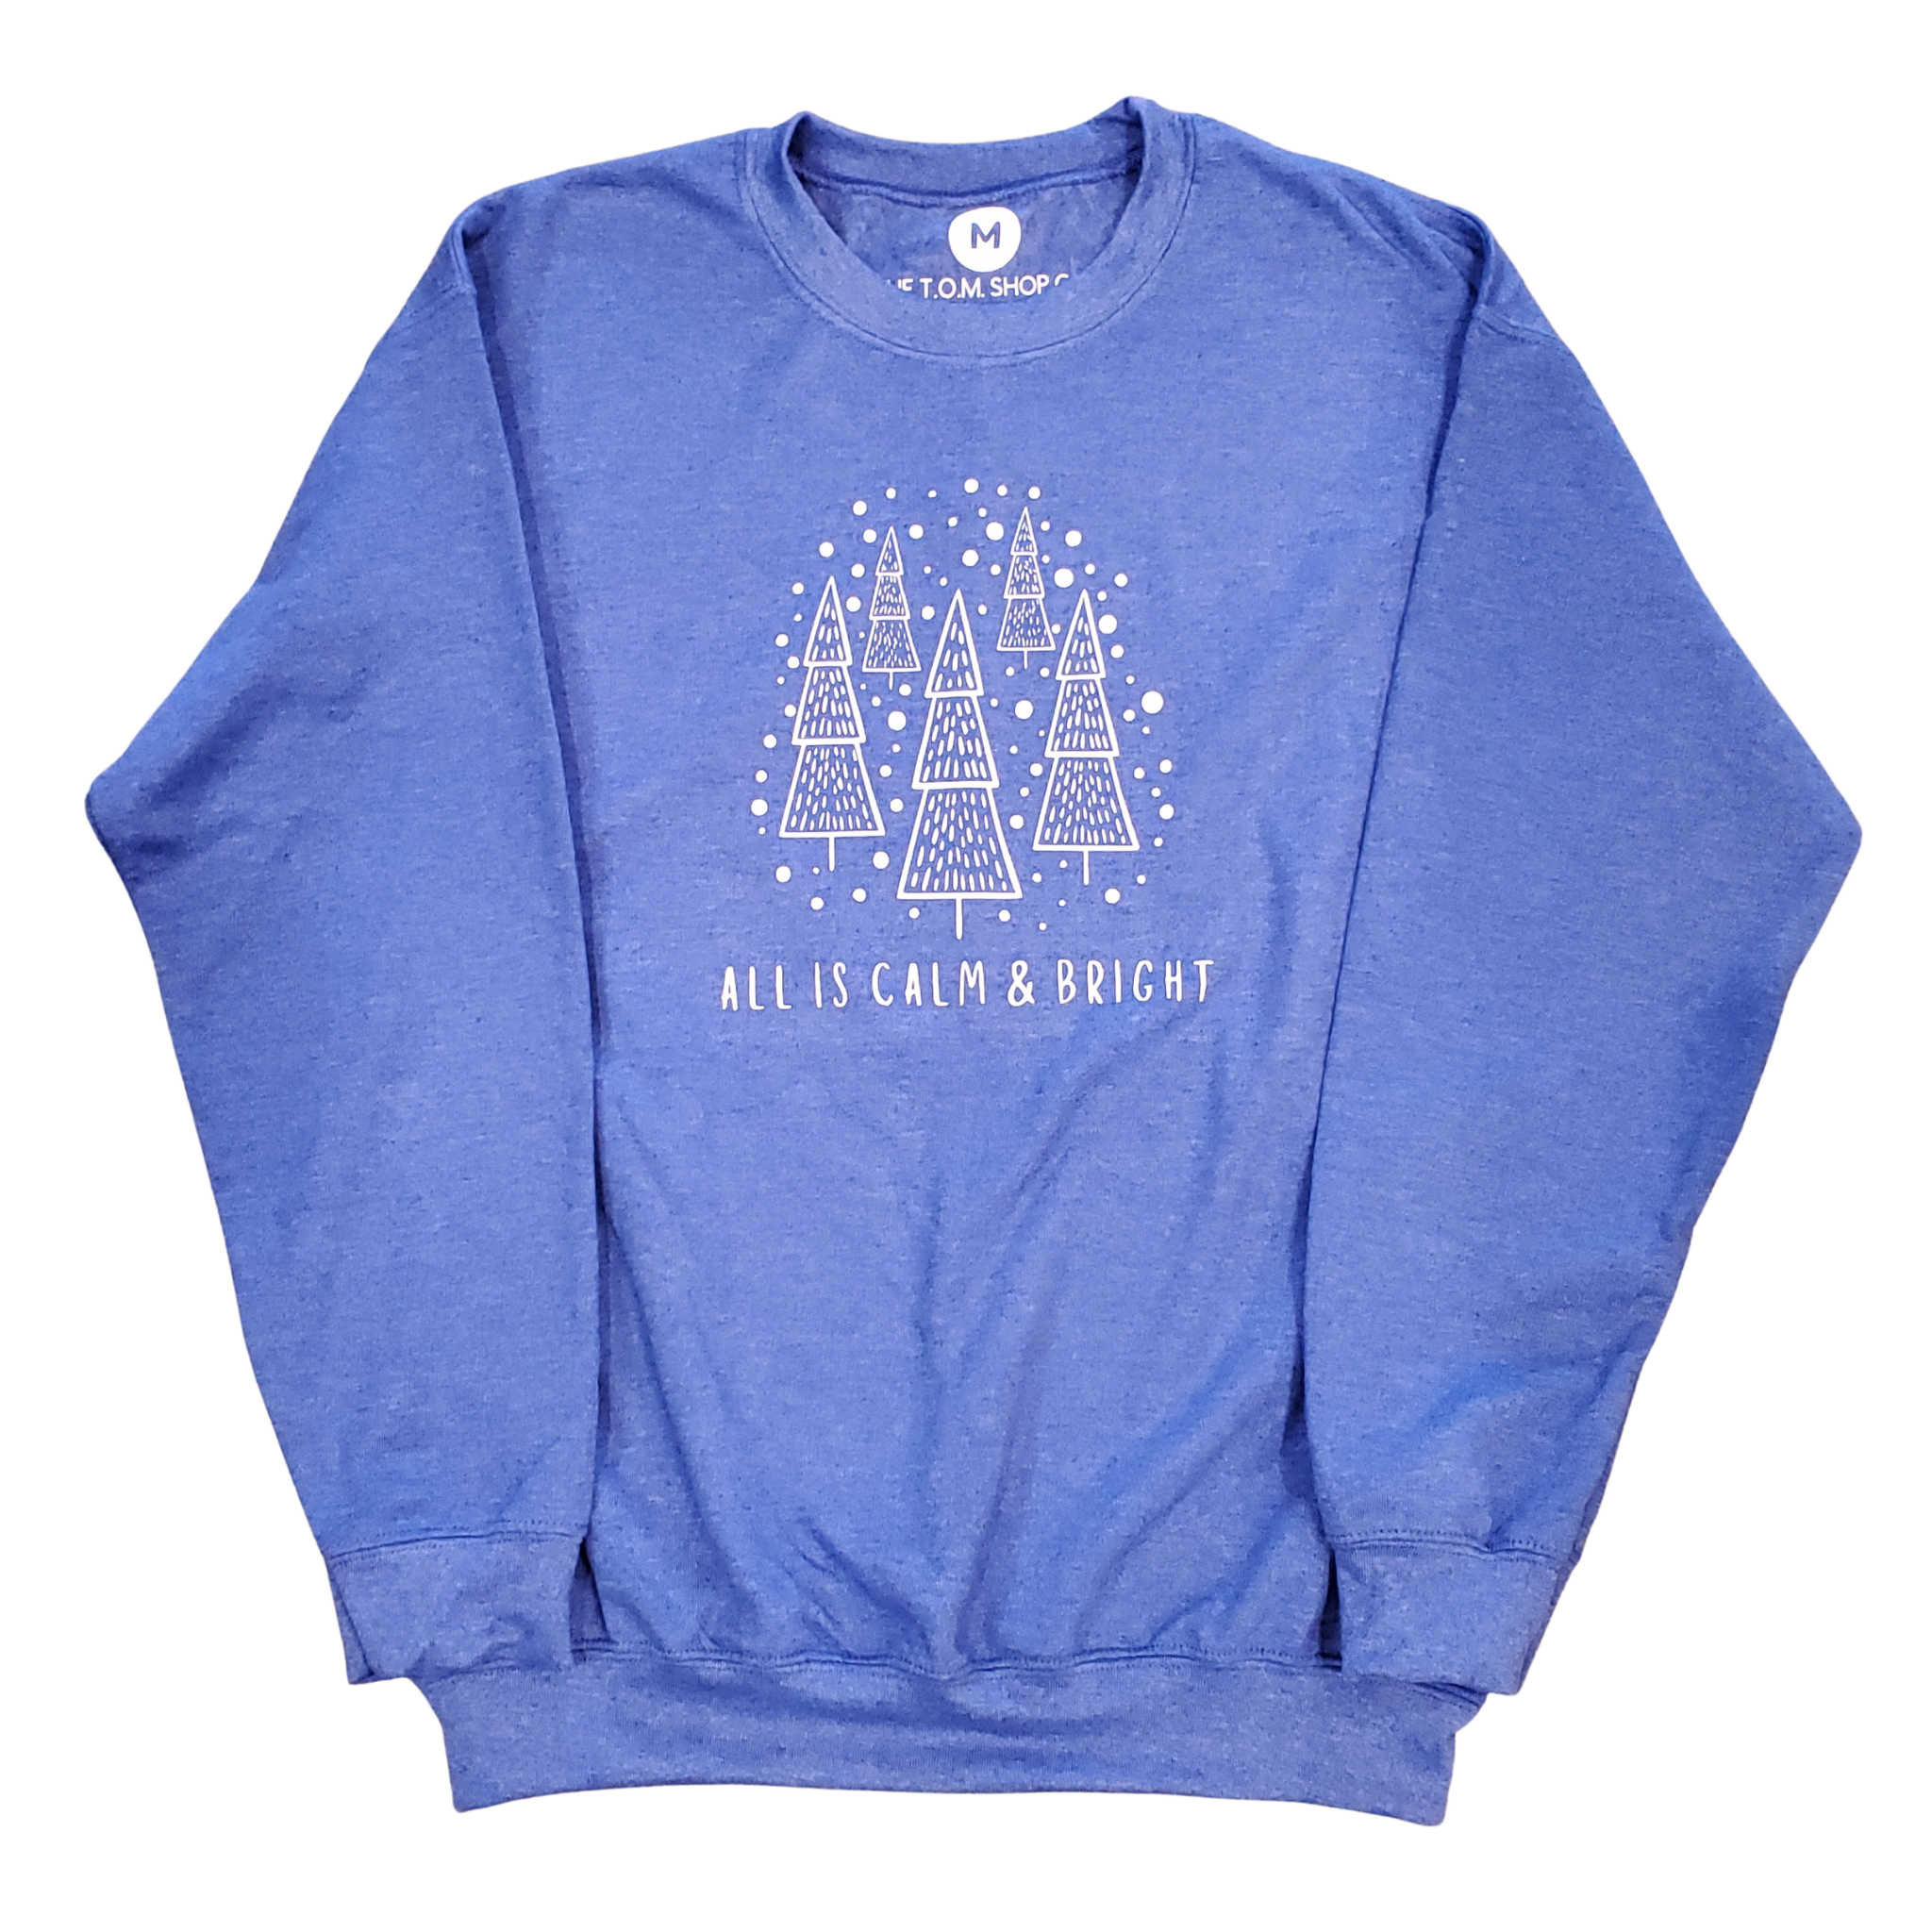 "CALM & BRIGHT" - Sweatshirt - Heather Blue